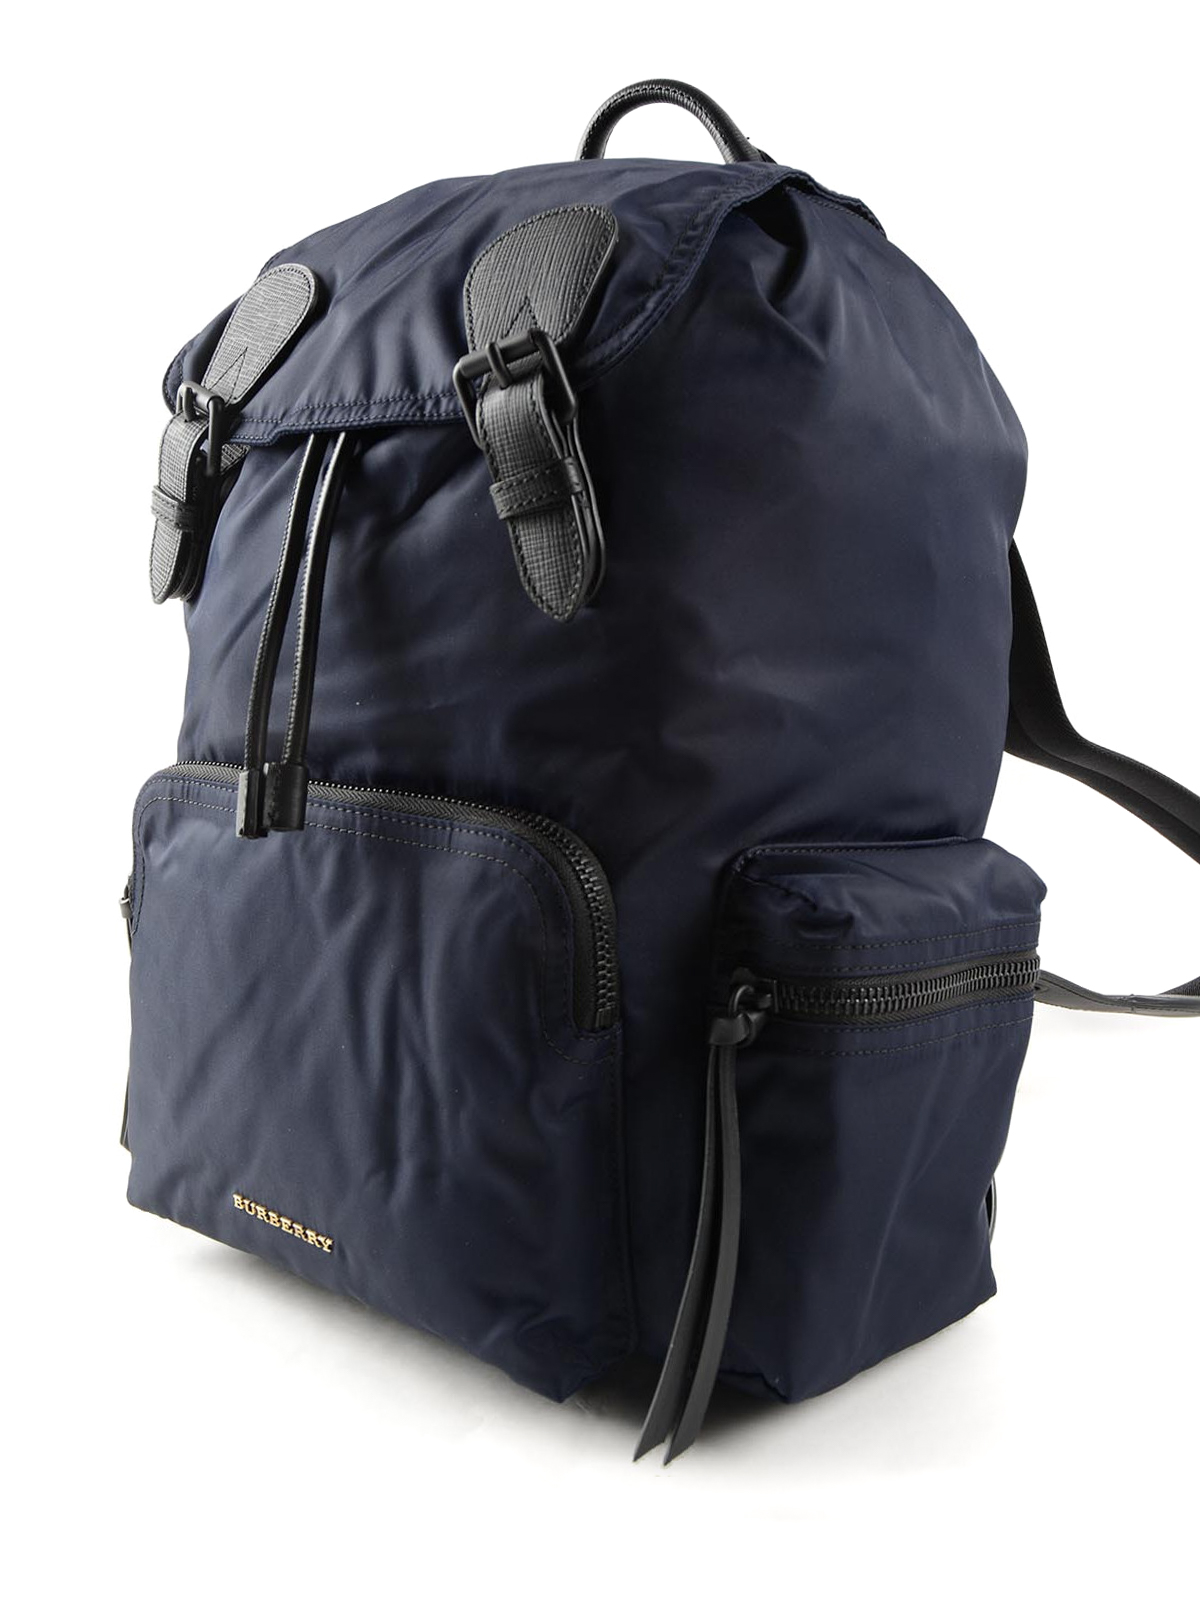 Burberry - Showerproof nylon backpack - backpacks - 4020937 | iKRIX.com